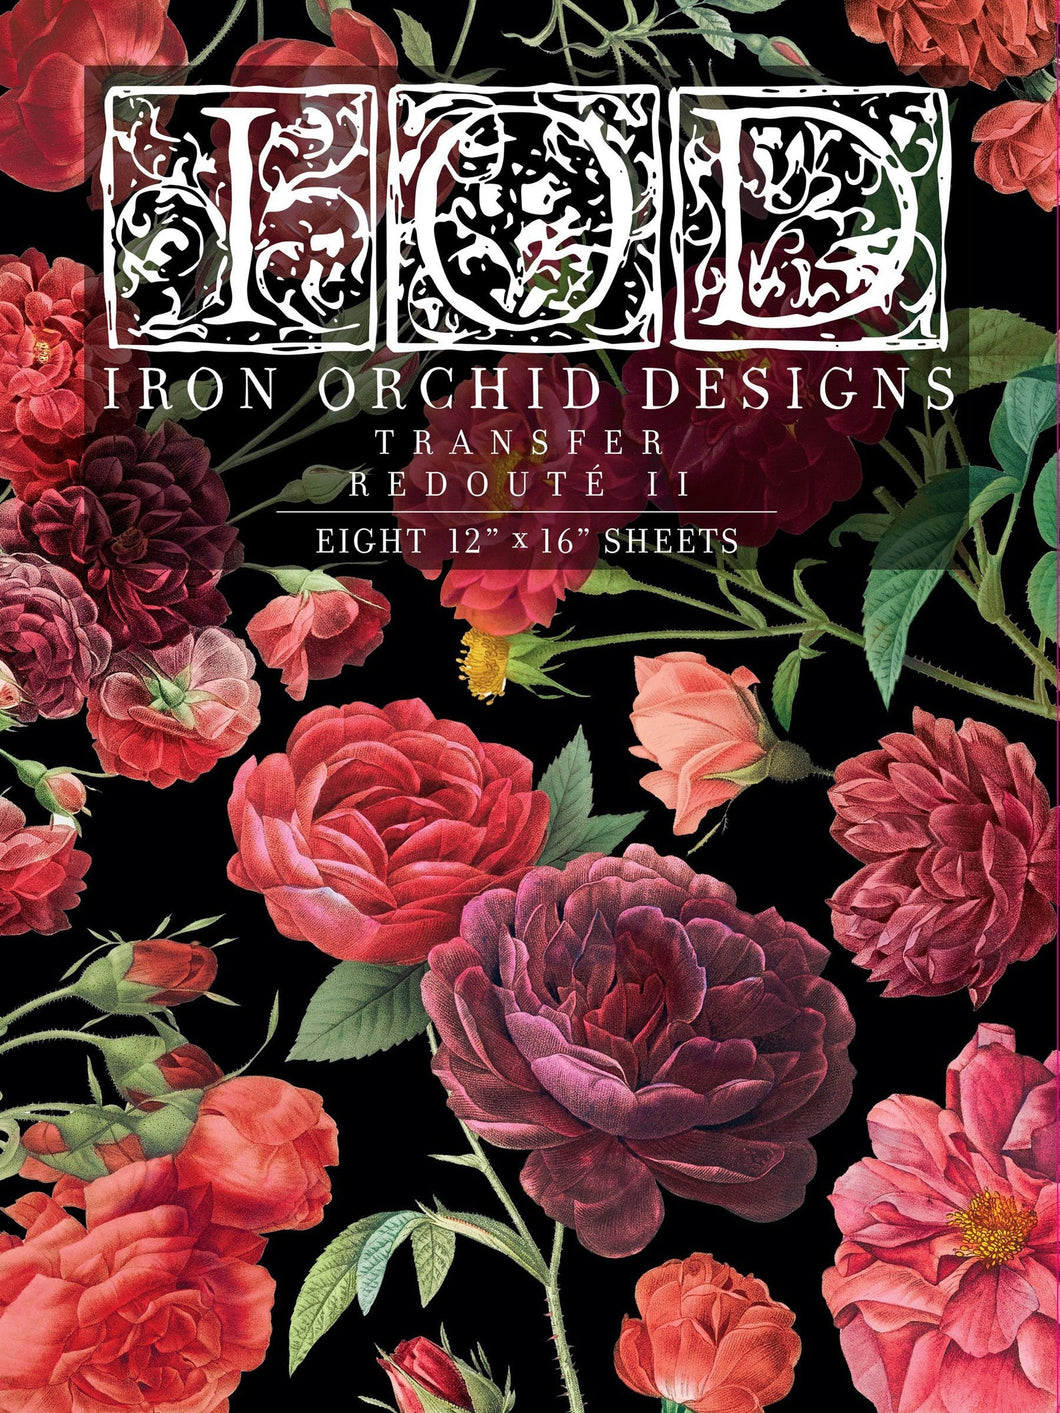 IOD Decor Transfer Redoute 2 Redoute II  by Iron Orchid Designs / Colecção Primavera 2021